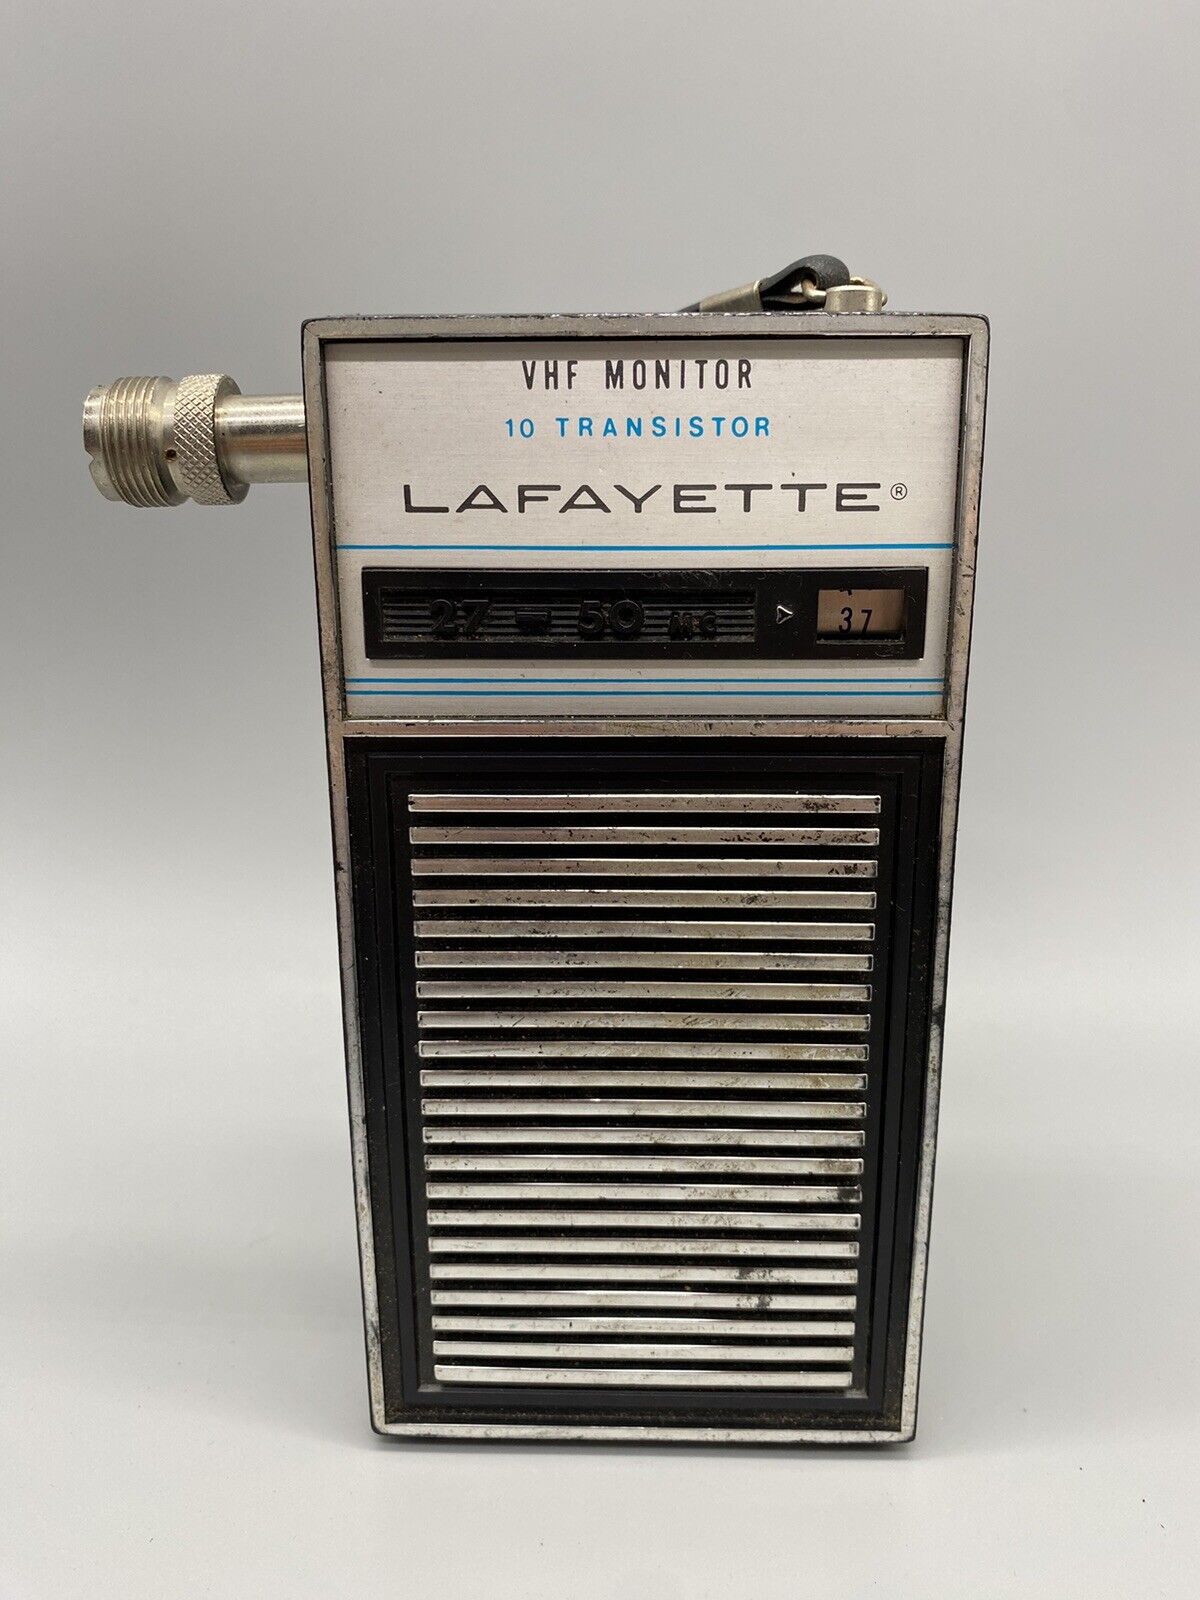 Vintage Lafayette 10 Transistor VHF Monitor Radio Model 99-35339L  POWERS ON